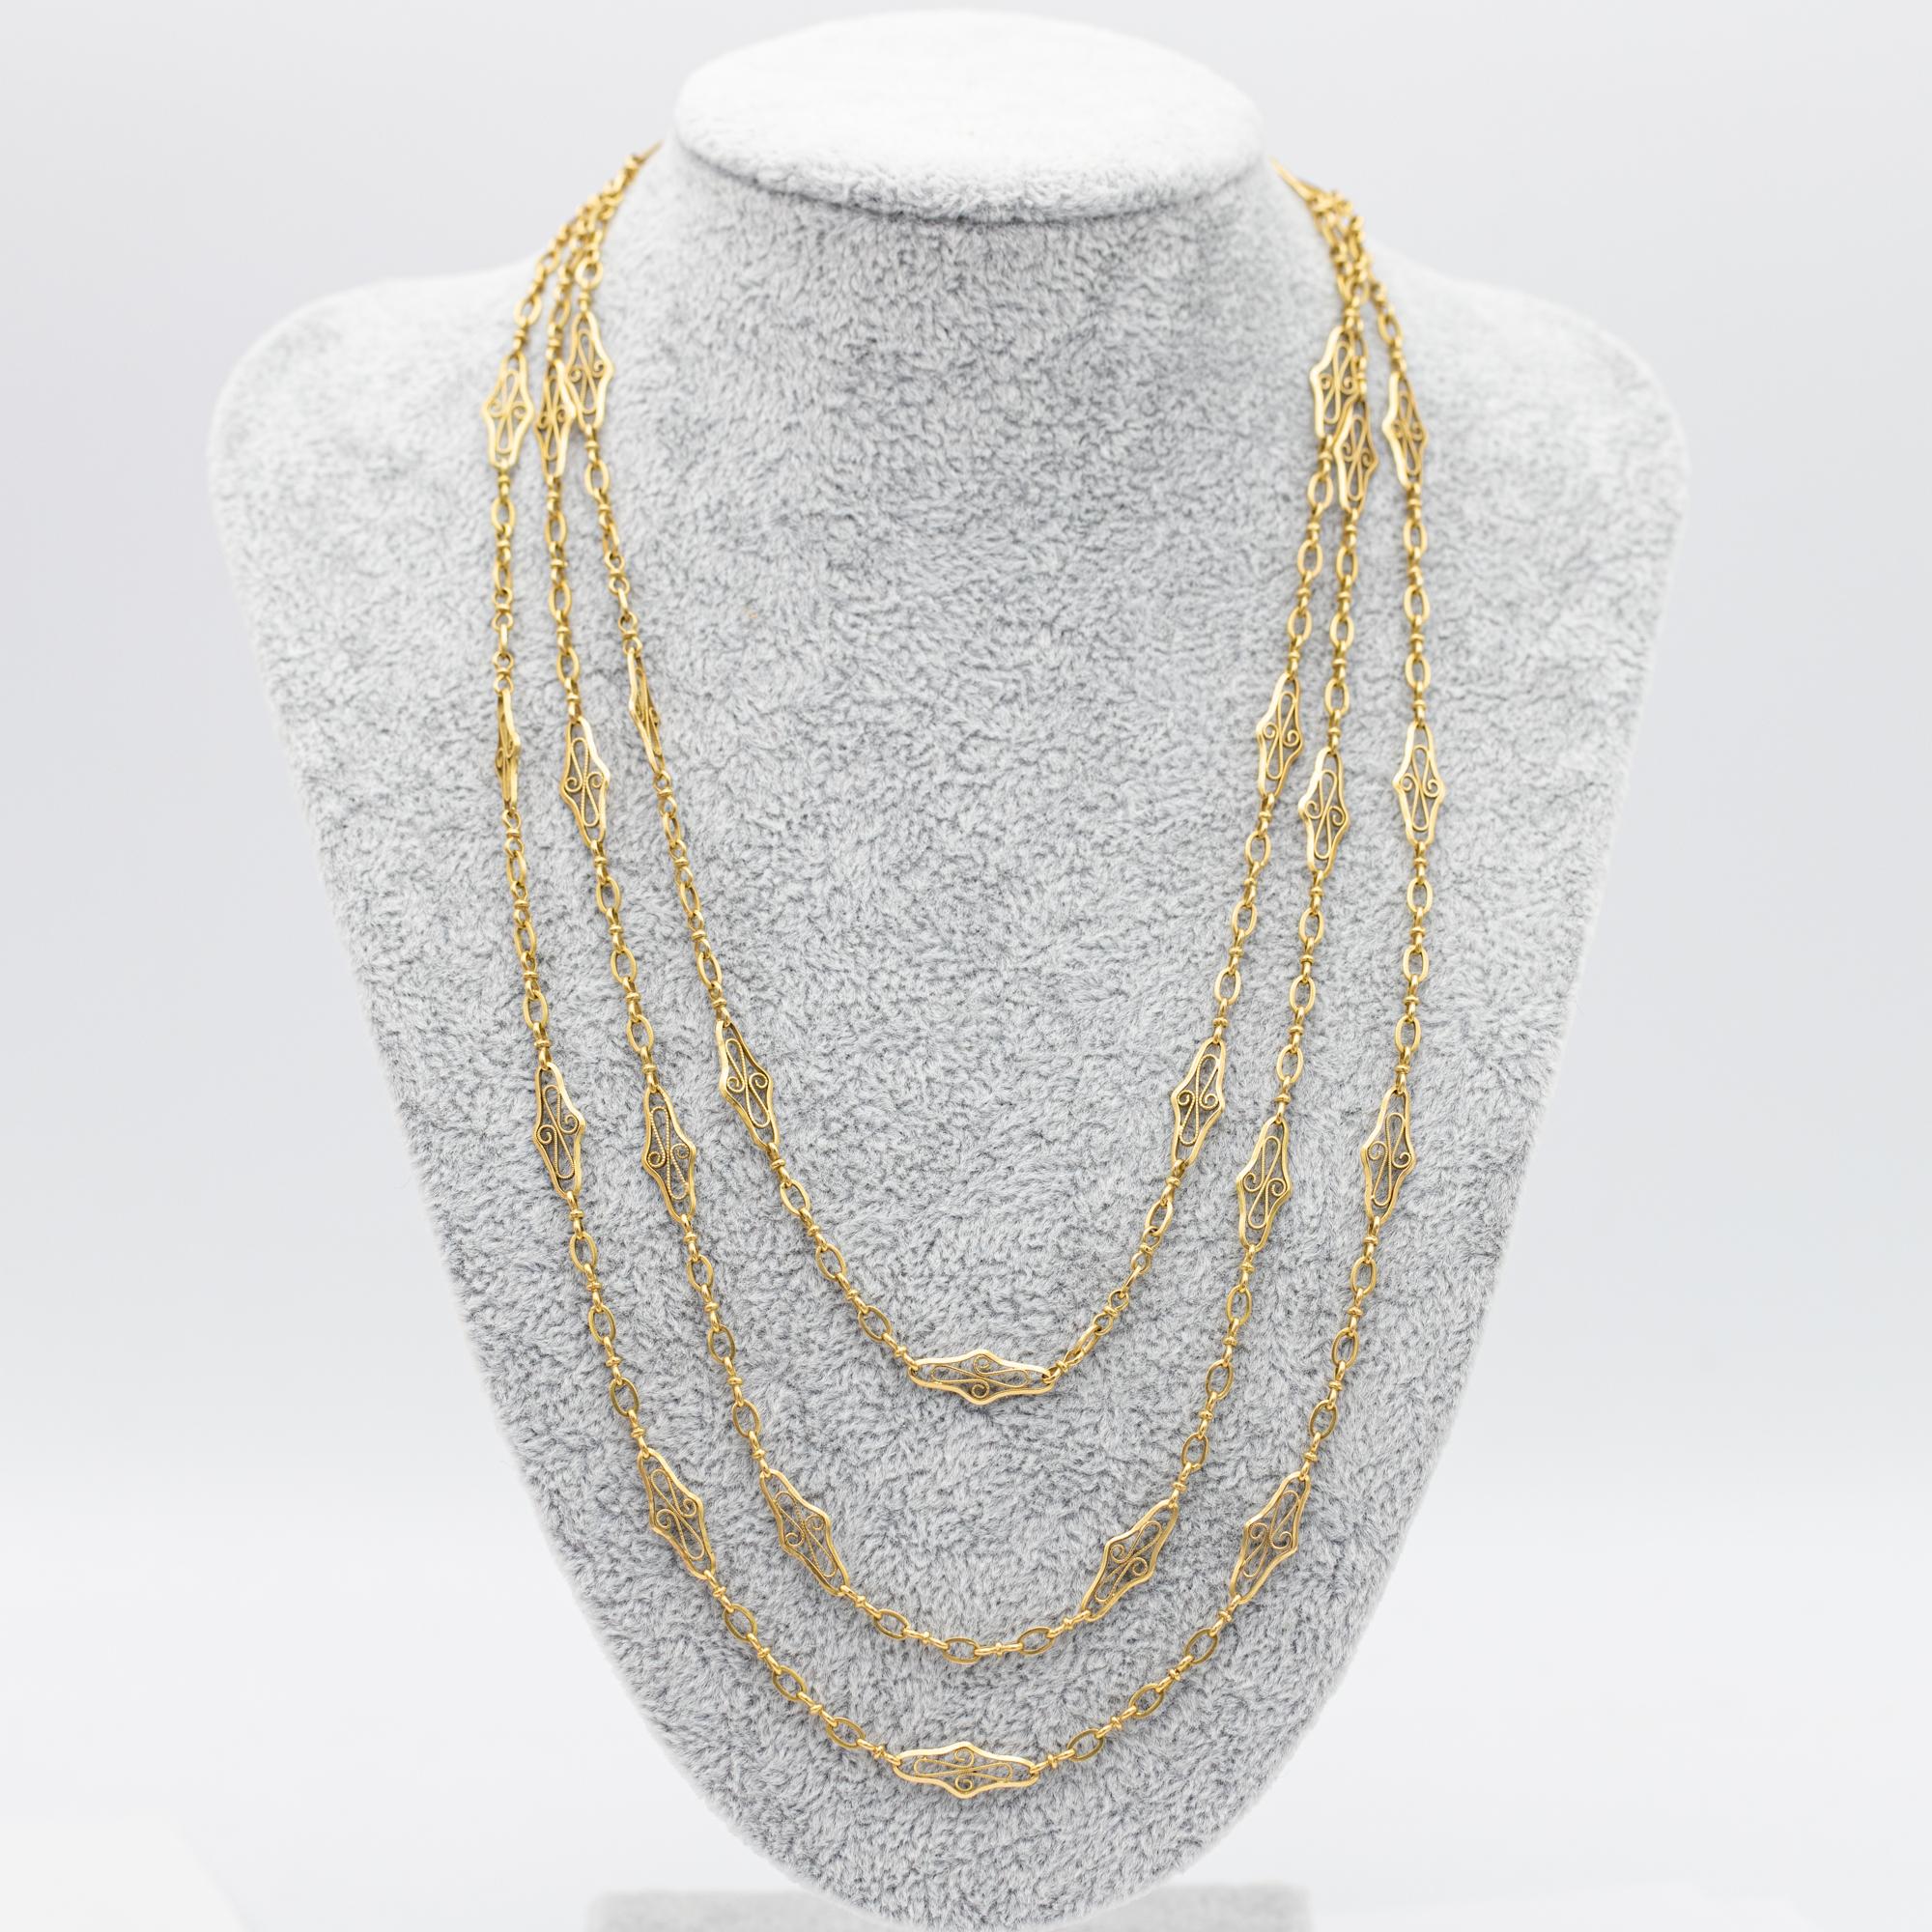 Antique 18k gold Sautoir necklace, 157.5cm long guard, French Victorian chain For Sale 2